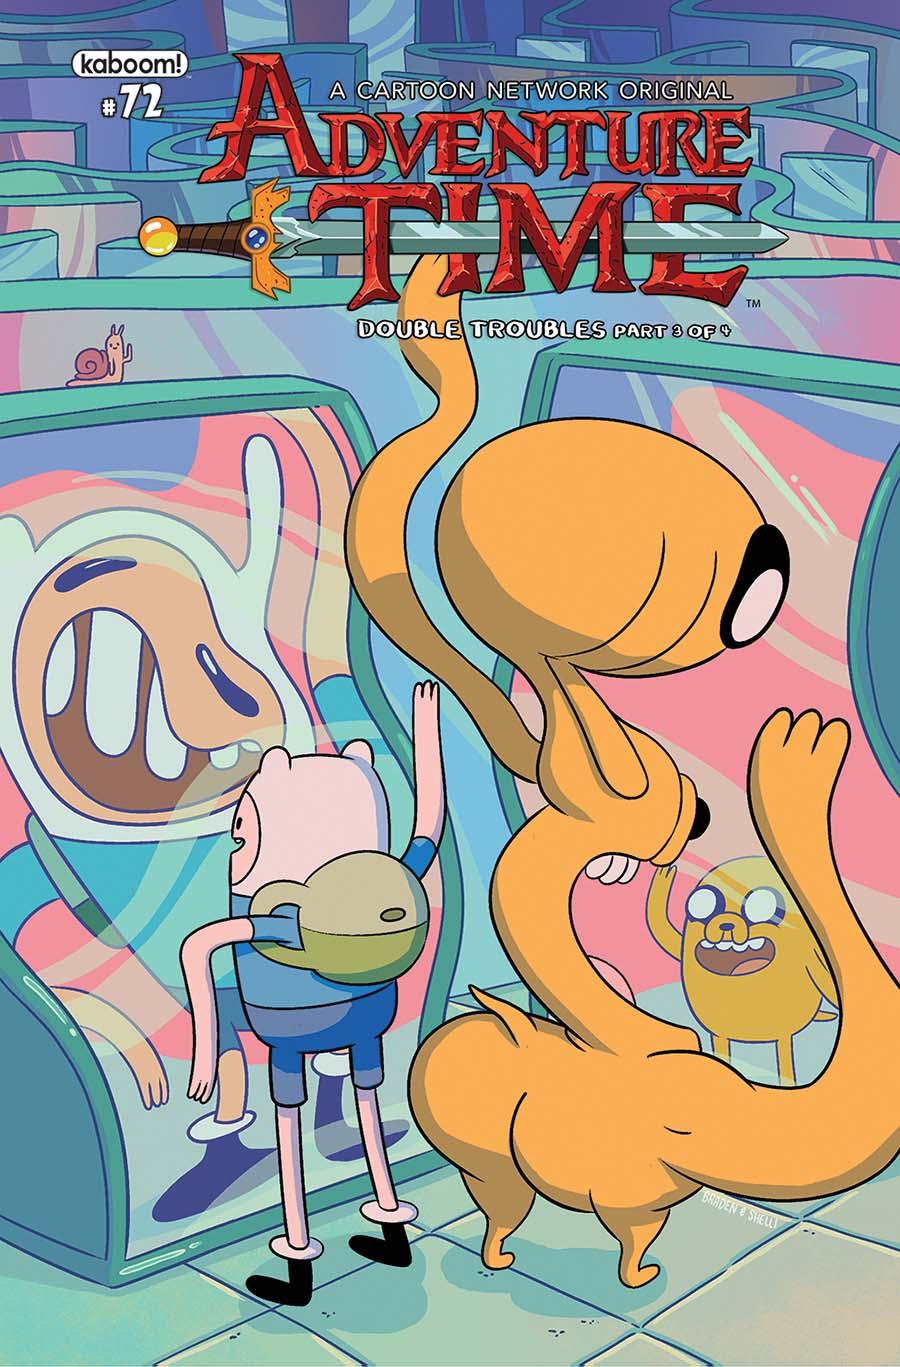 Adventure Time Vol. 1 #72